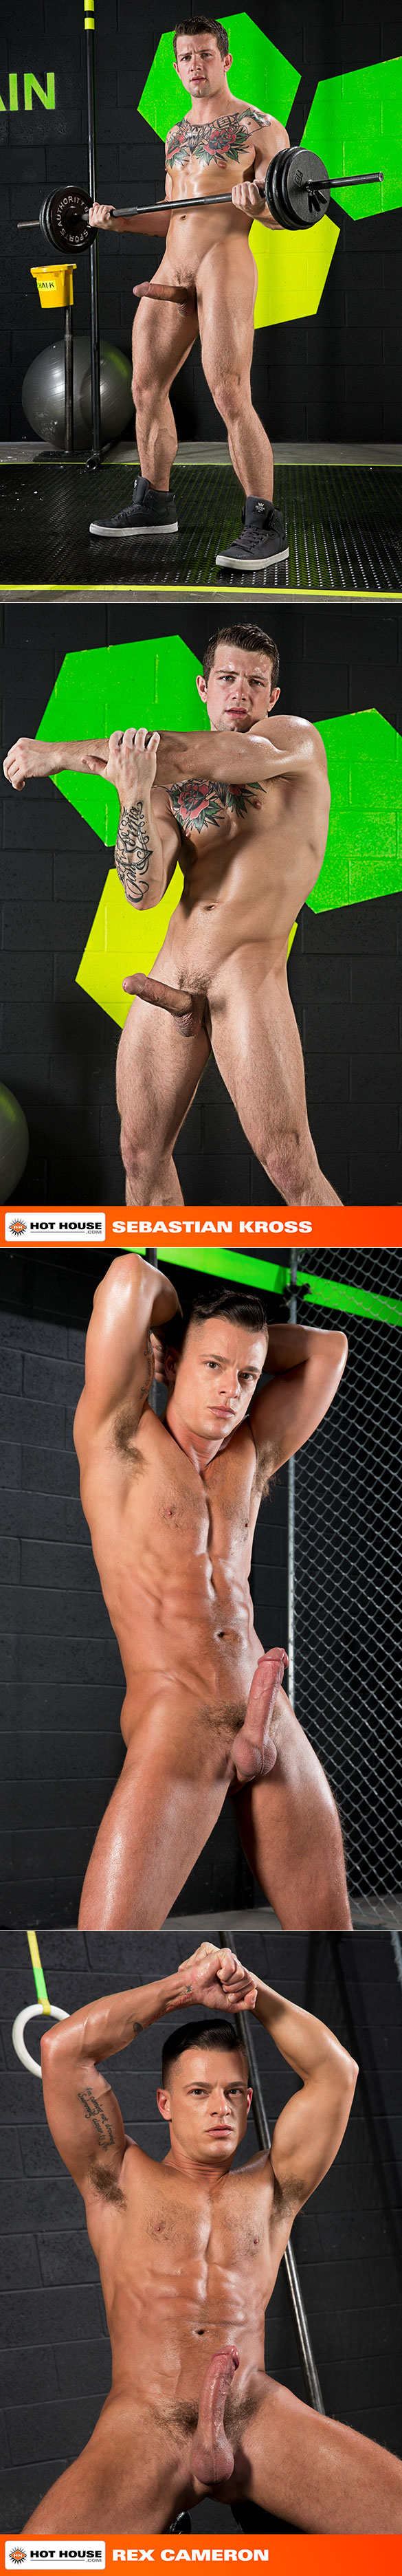 HotHouse: Sebastian Kross fucks Rex Cameron in "The Trainer"